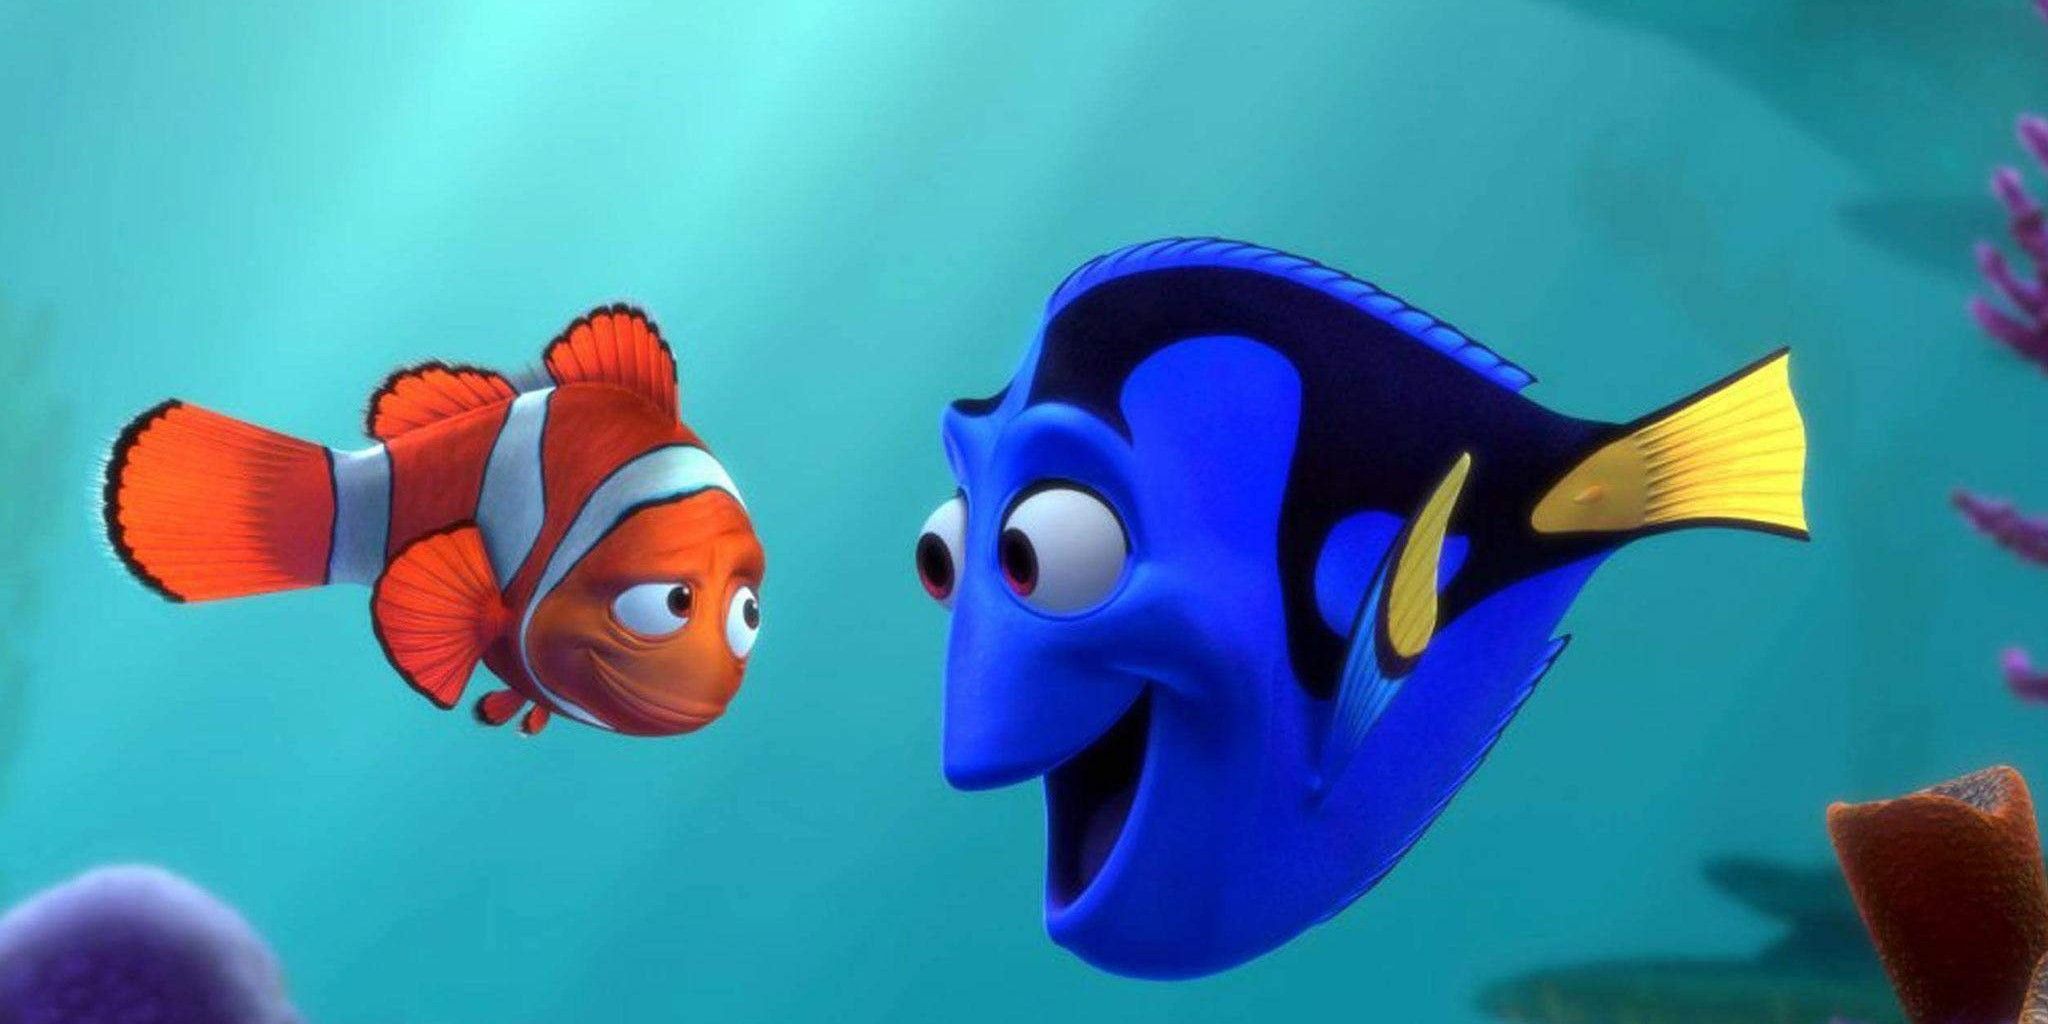 10 Pixar Films That Deserve A Sequel (According To Reddit)